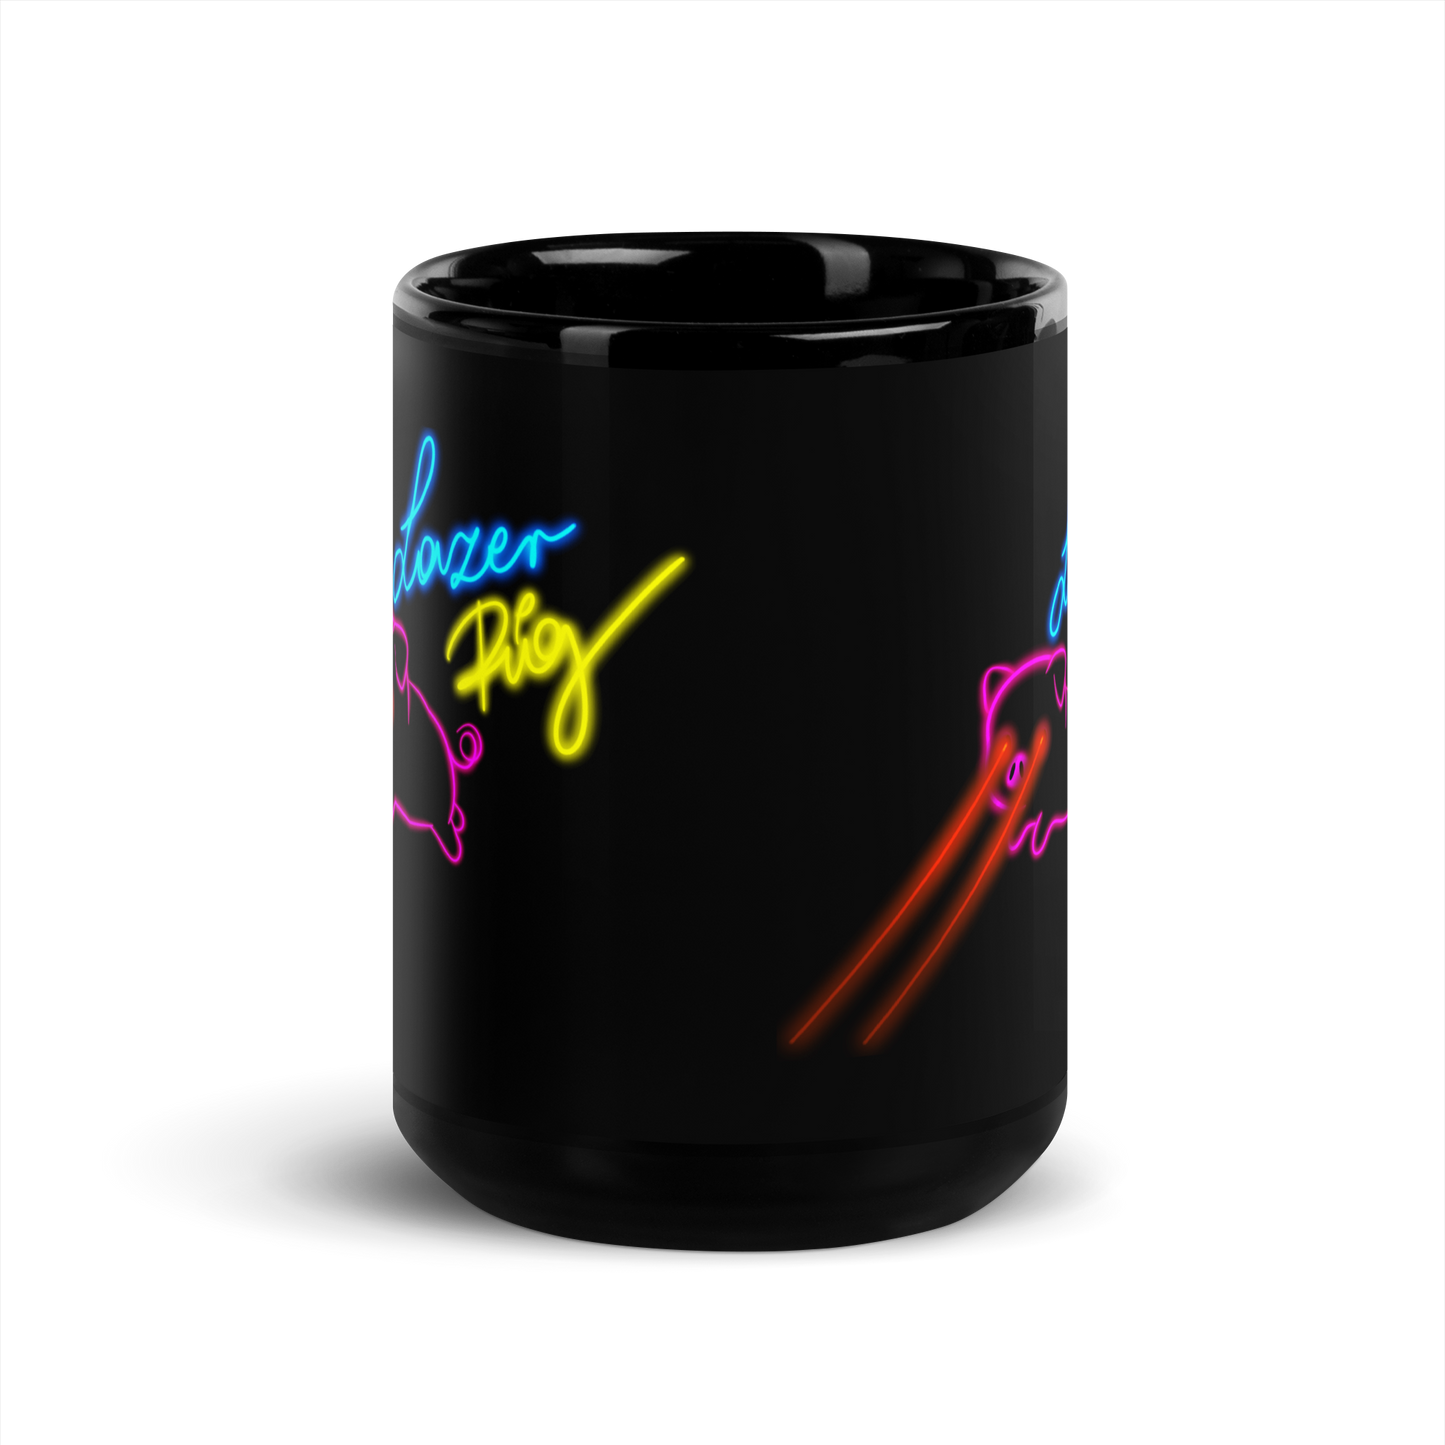 LazerPig Neon Mug (US Only)